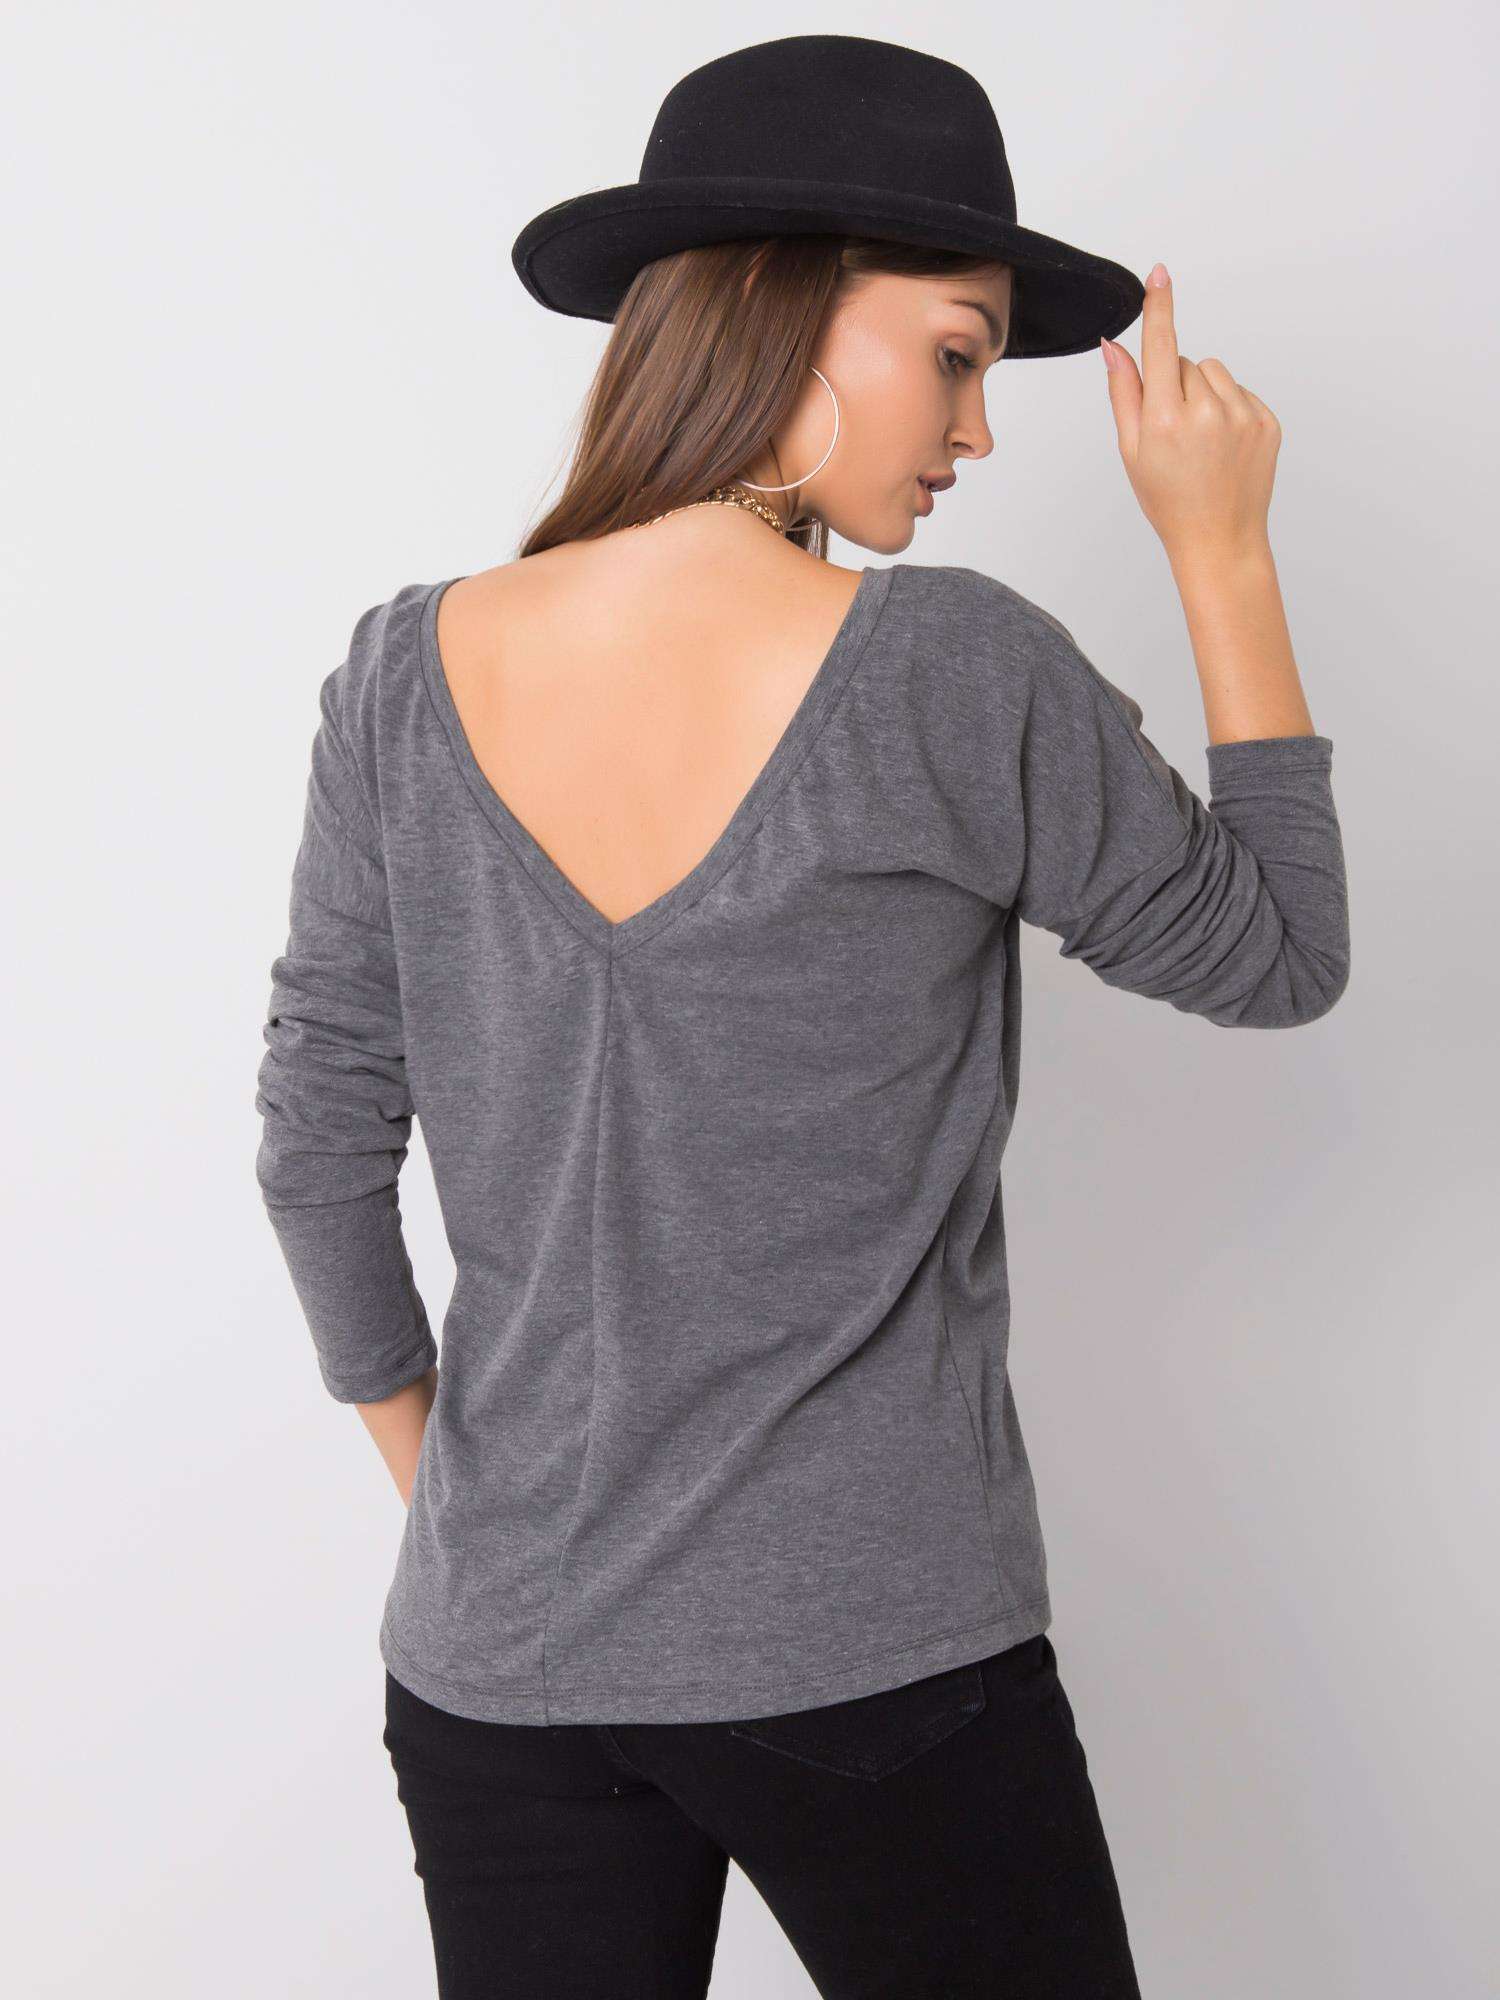 Dark gray melange blouse with a neckline on the back